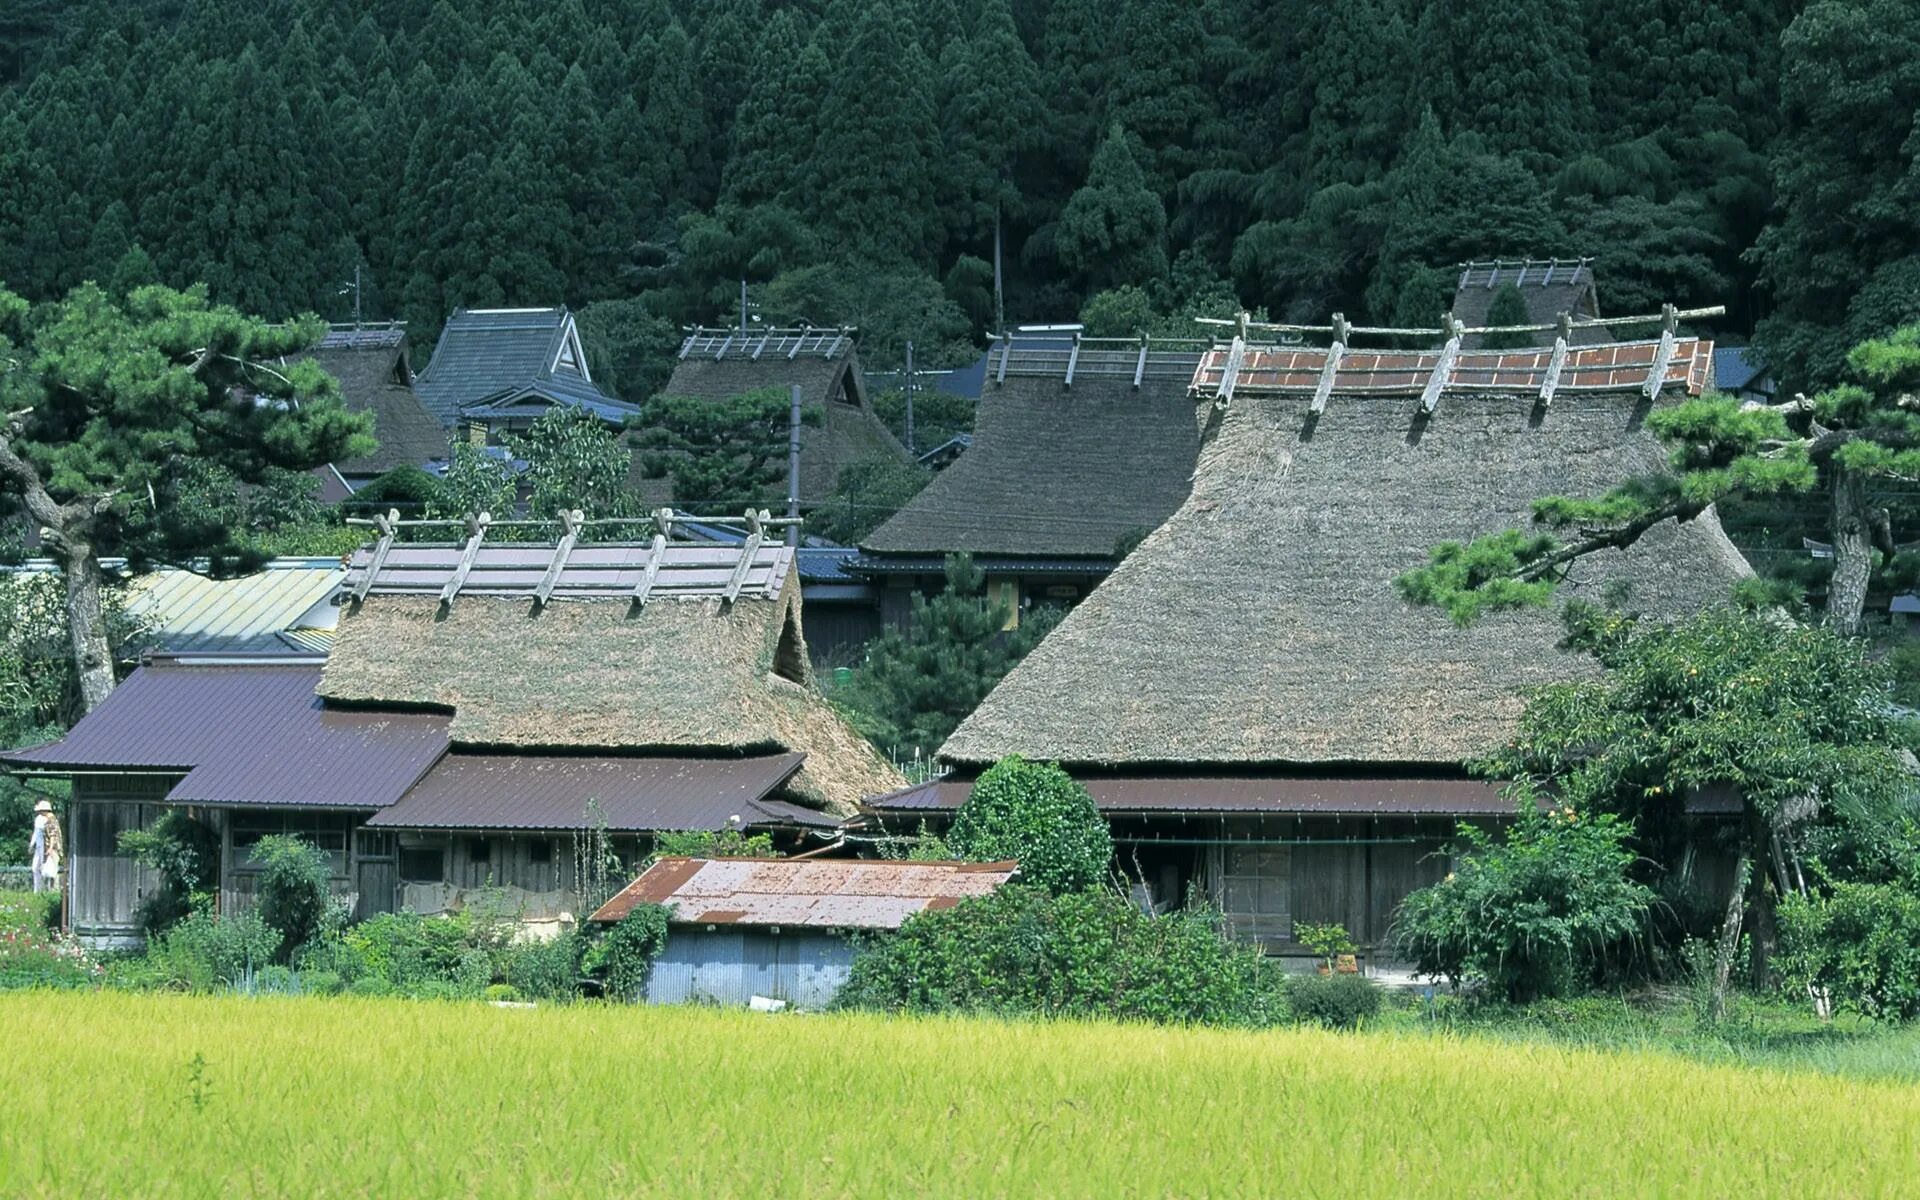 Japanese village. Японская деревня. Японский деревенский дом. Япония Сельская местность. Деревенский домик в Японии.